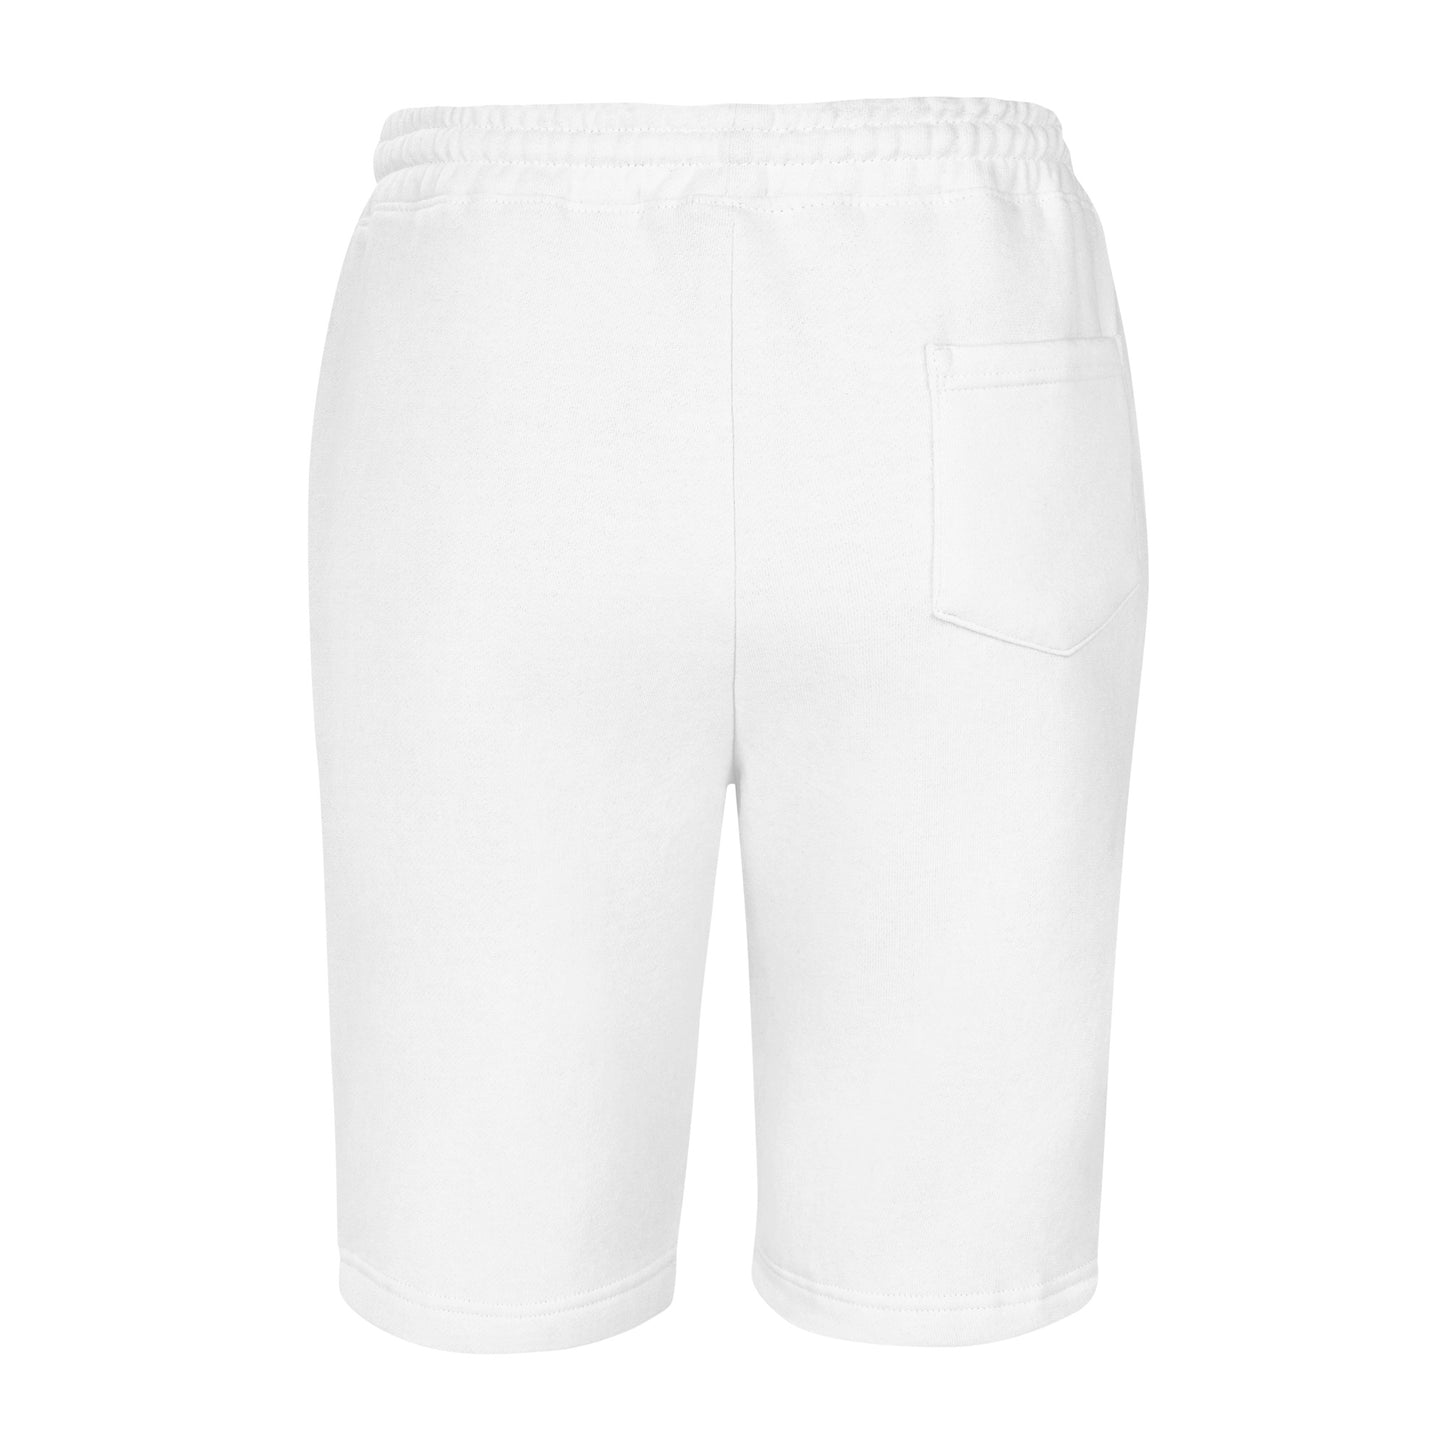 White Crylix fleece shorts